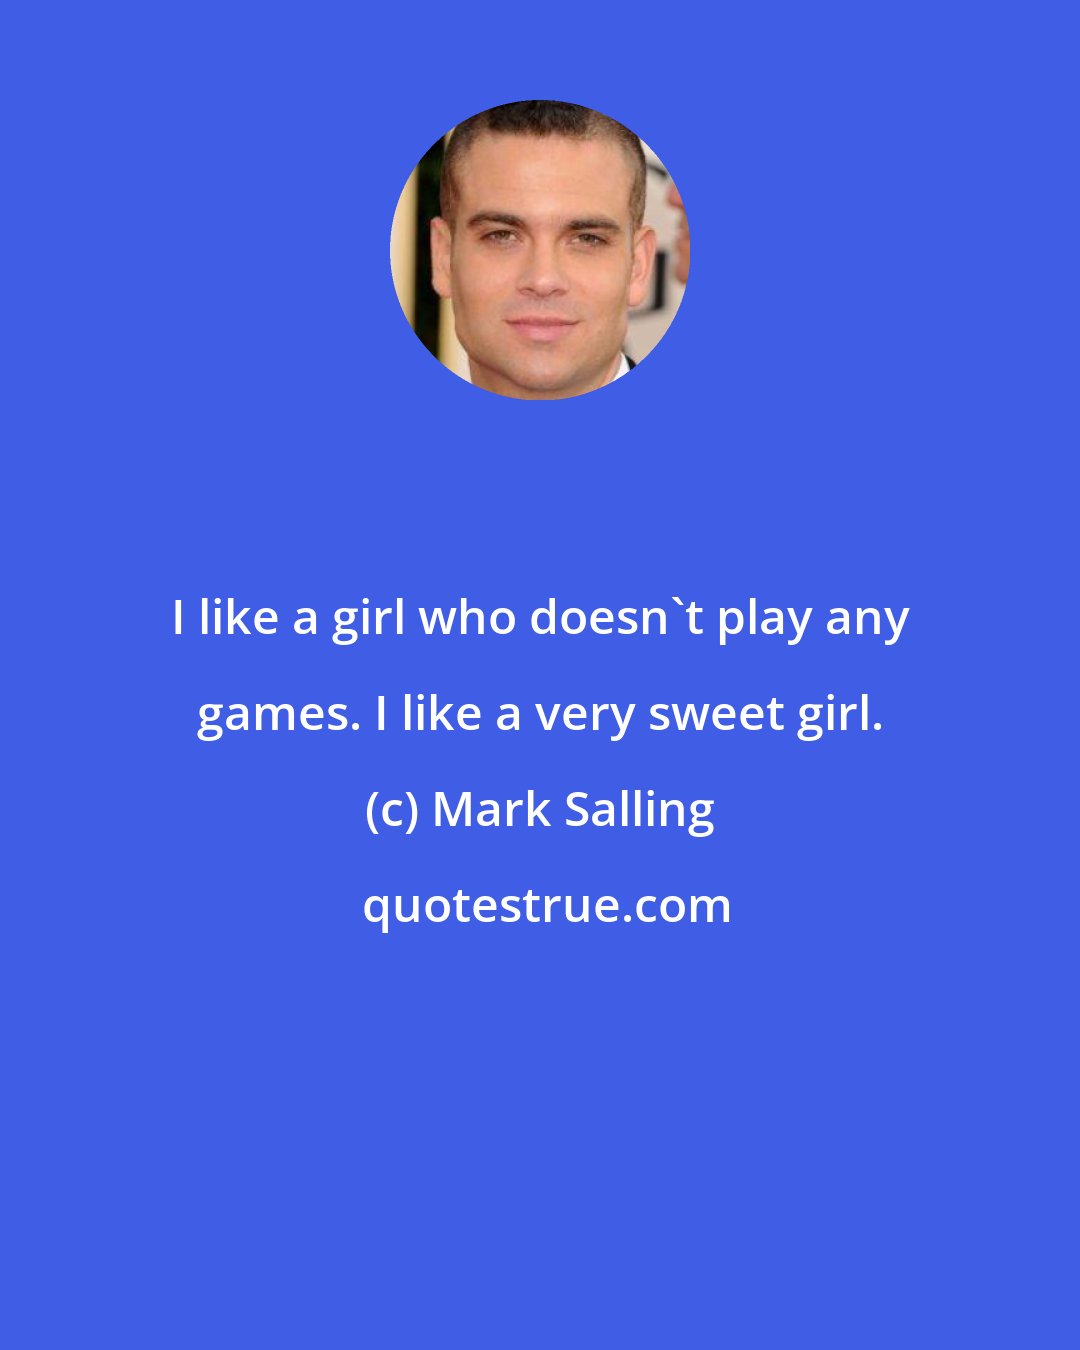 Mark Salling: I like a girl who doesn't play any games. I like a very sweet girl.